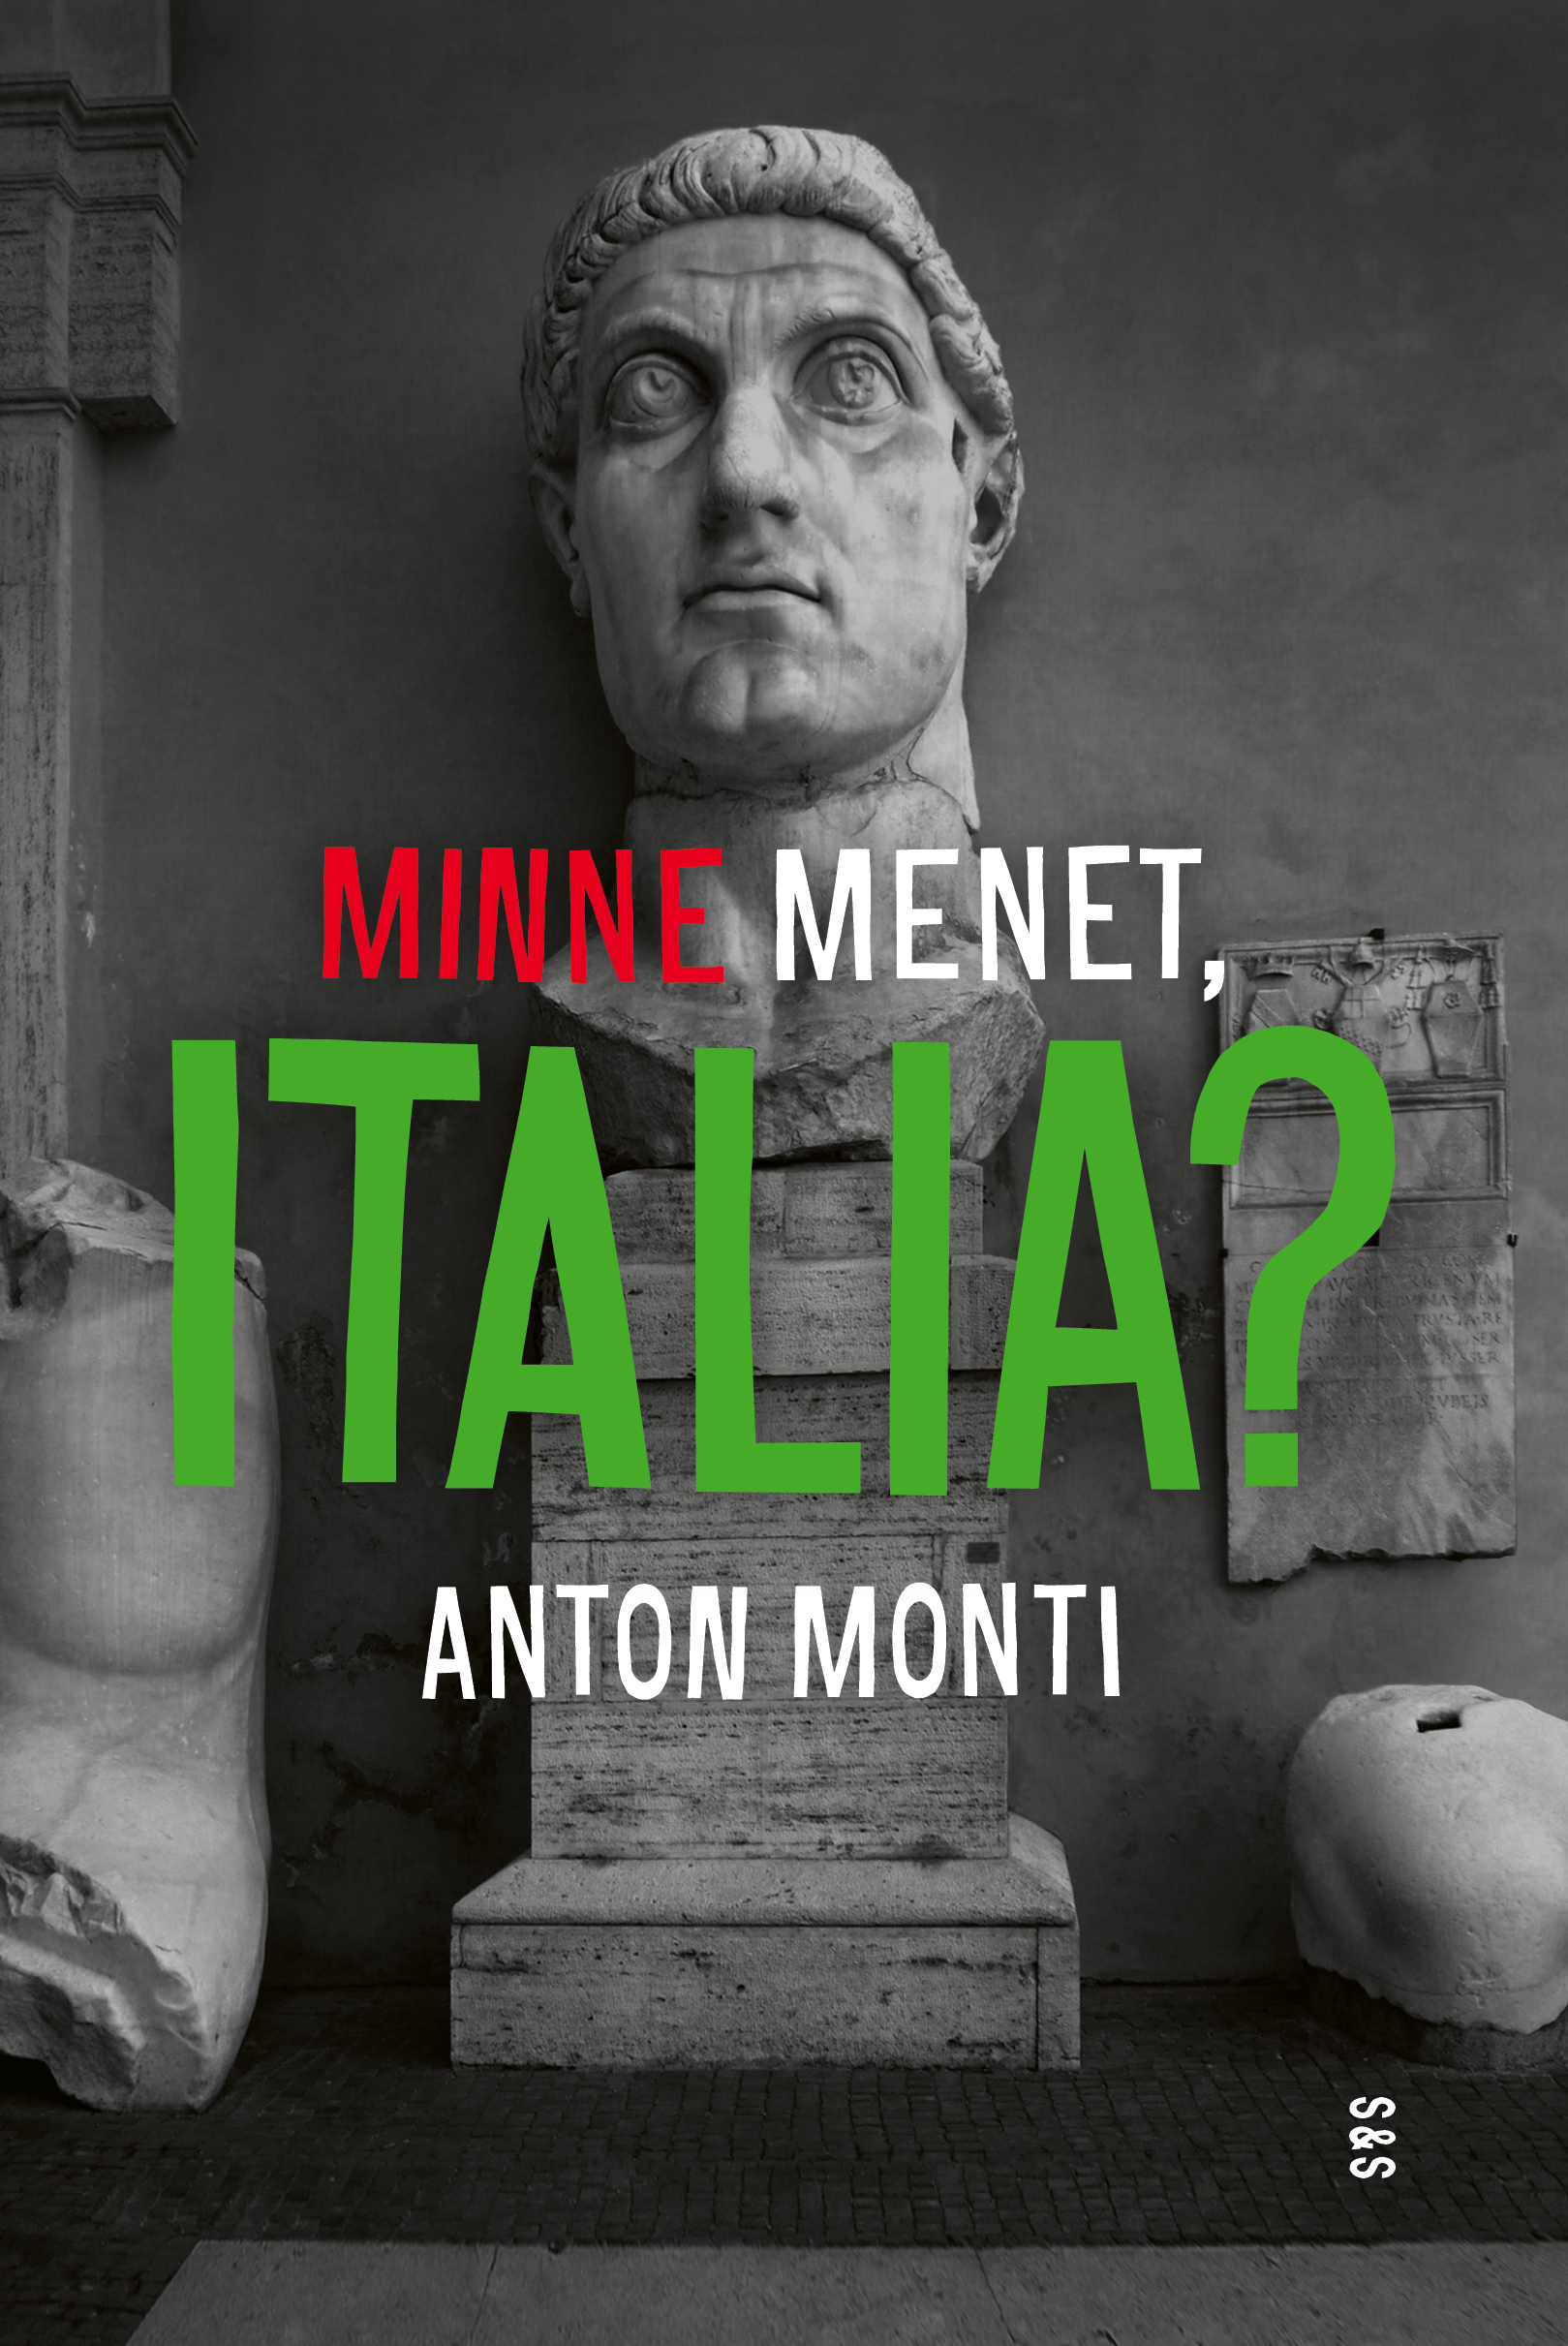 Monti, Anton - Minne menet, Italia?, ebook